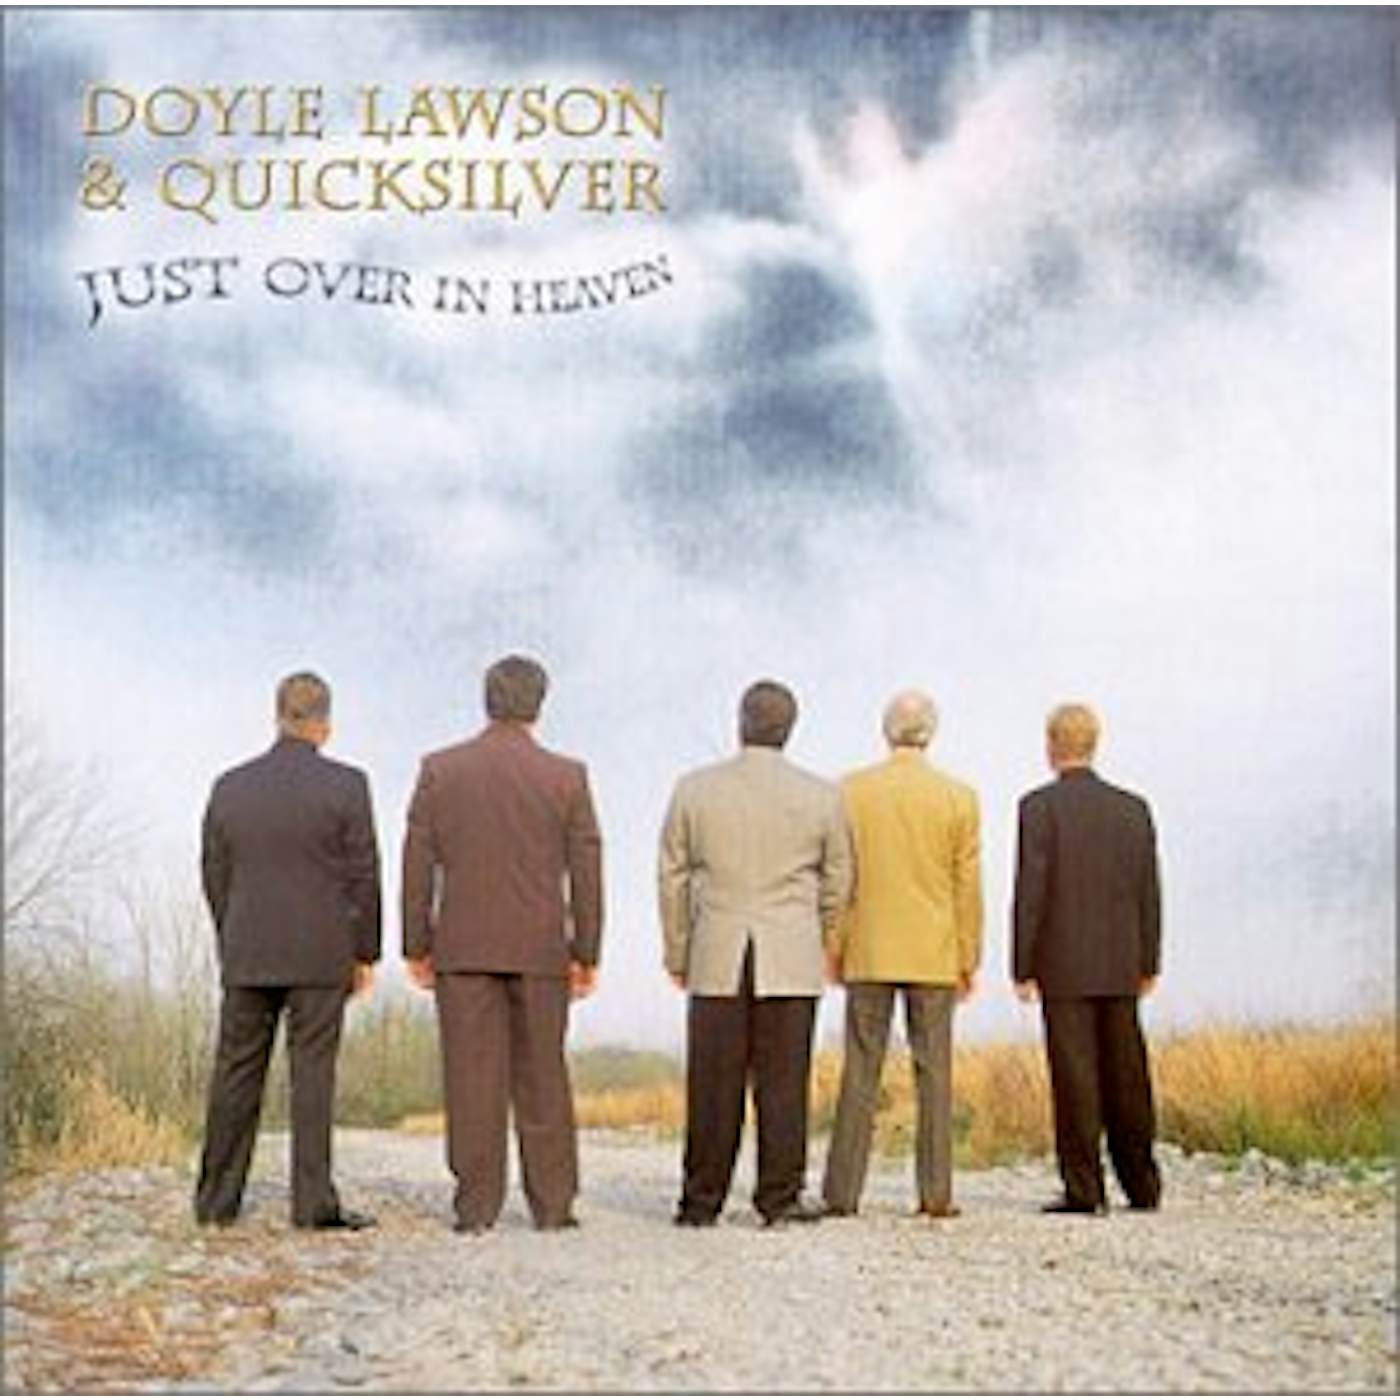 Doyle Lawson & Quicksilver JUST OVER IN HEAVEN CD